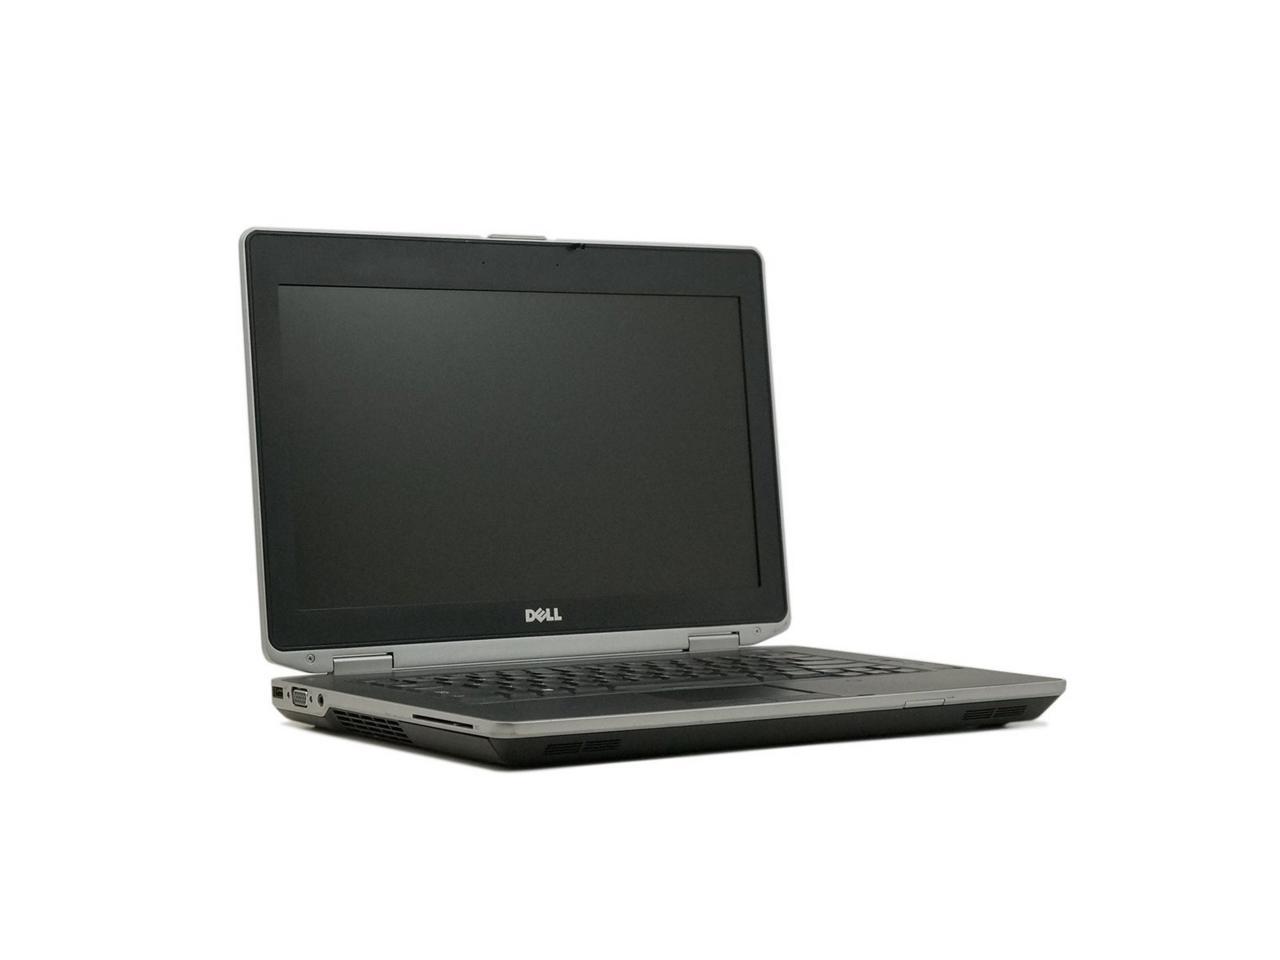 Dell Latitude E6430 Laptop Computer, 2.50 GHz Intel i7 Dual Core Gen 3, 4GB DDR3 RAM, 128GB SSD Hard Drive, Windows 10 Home 64 Bit, 14" Screen (Grade B)